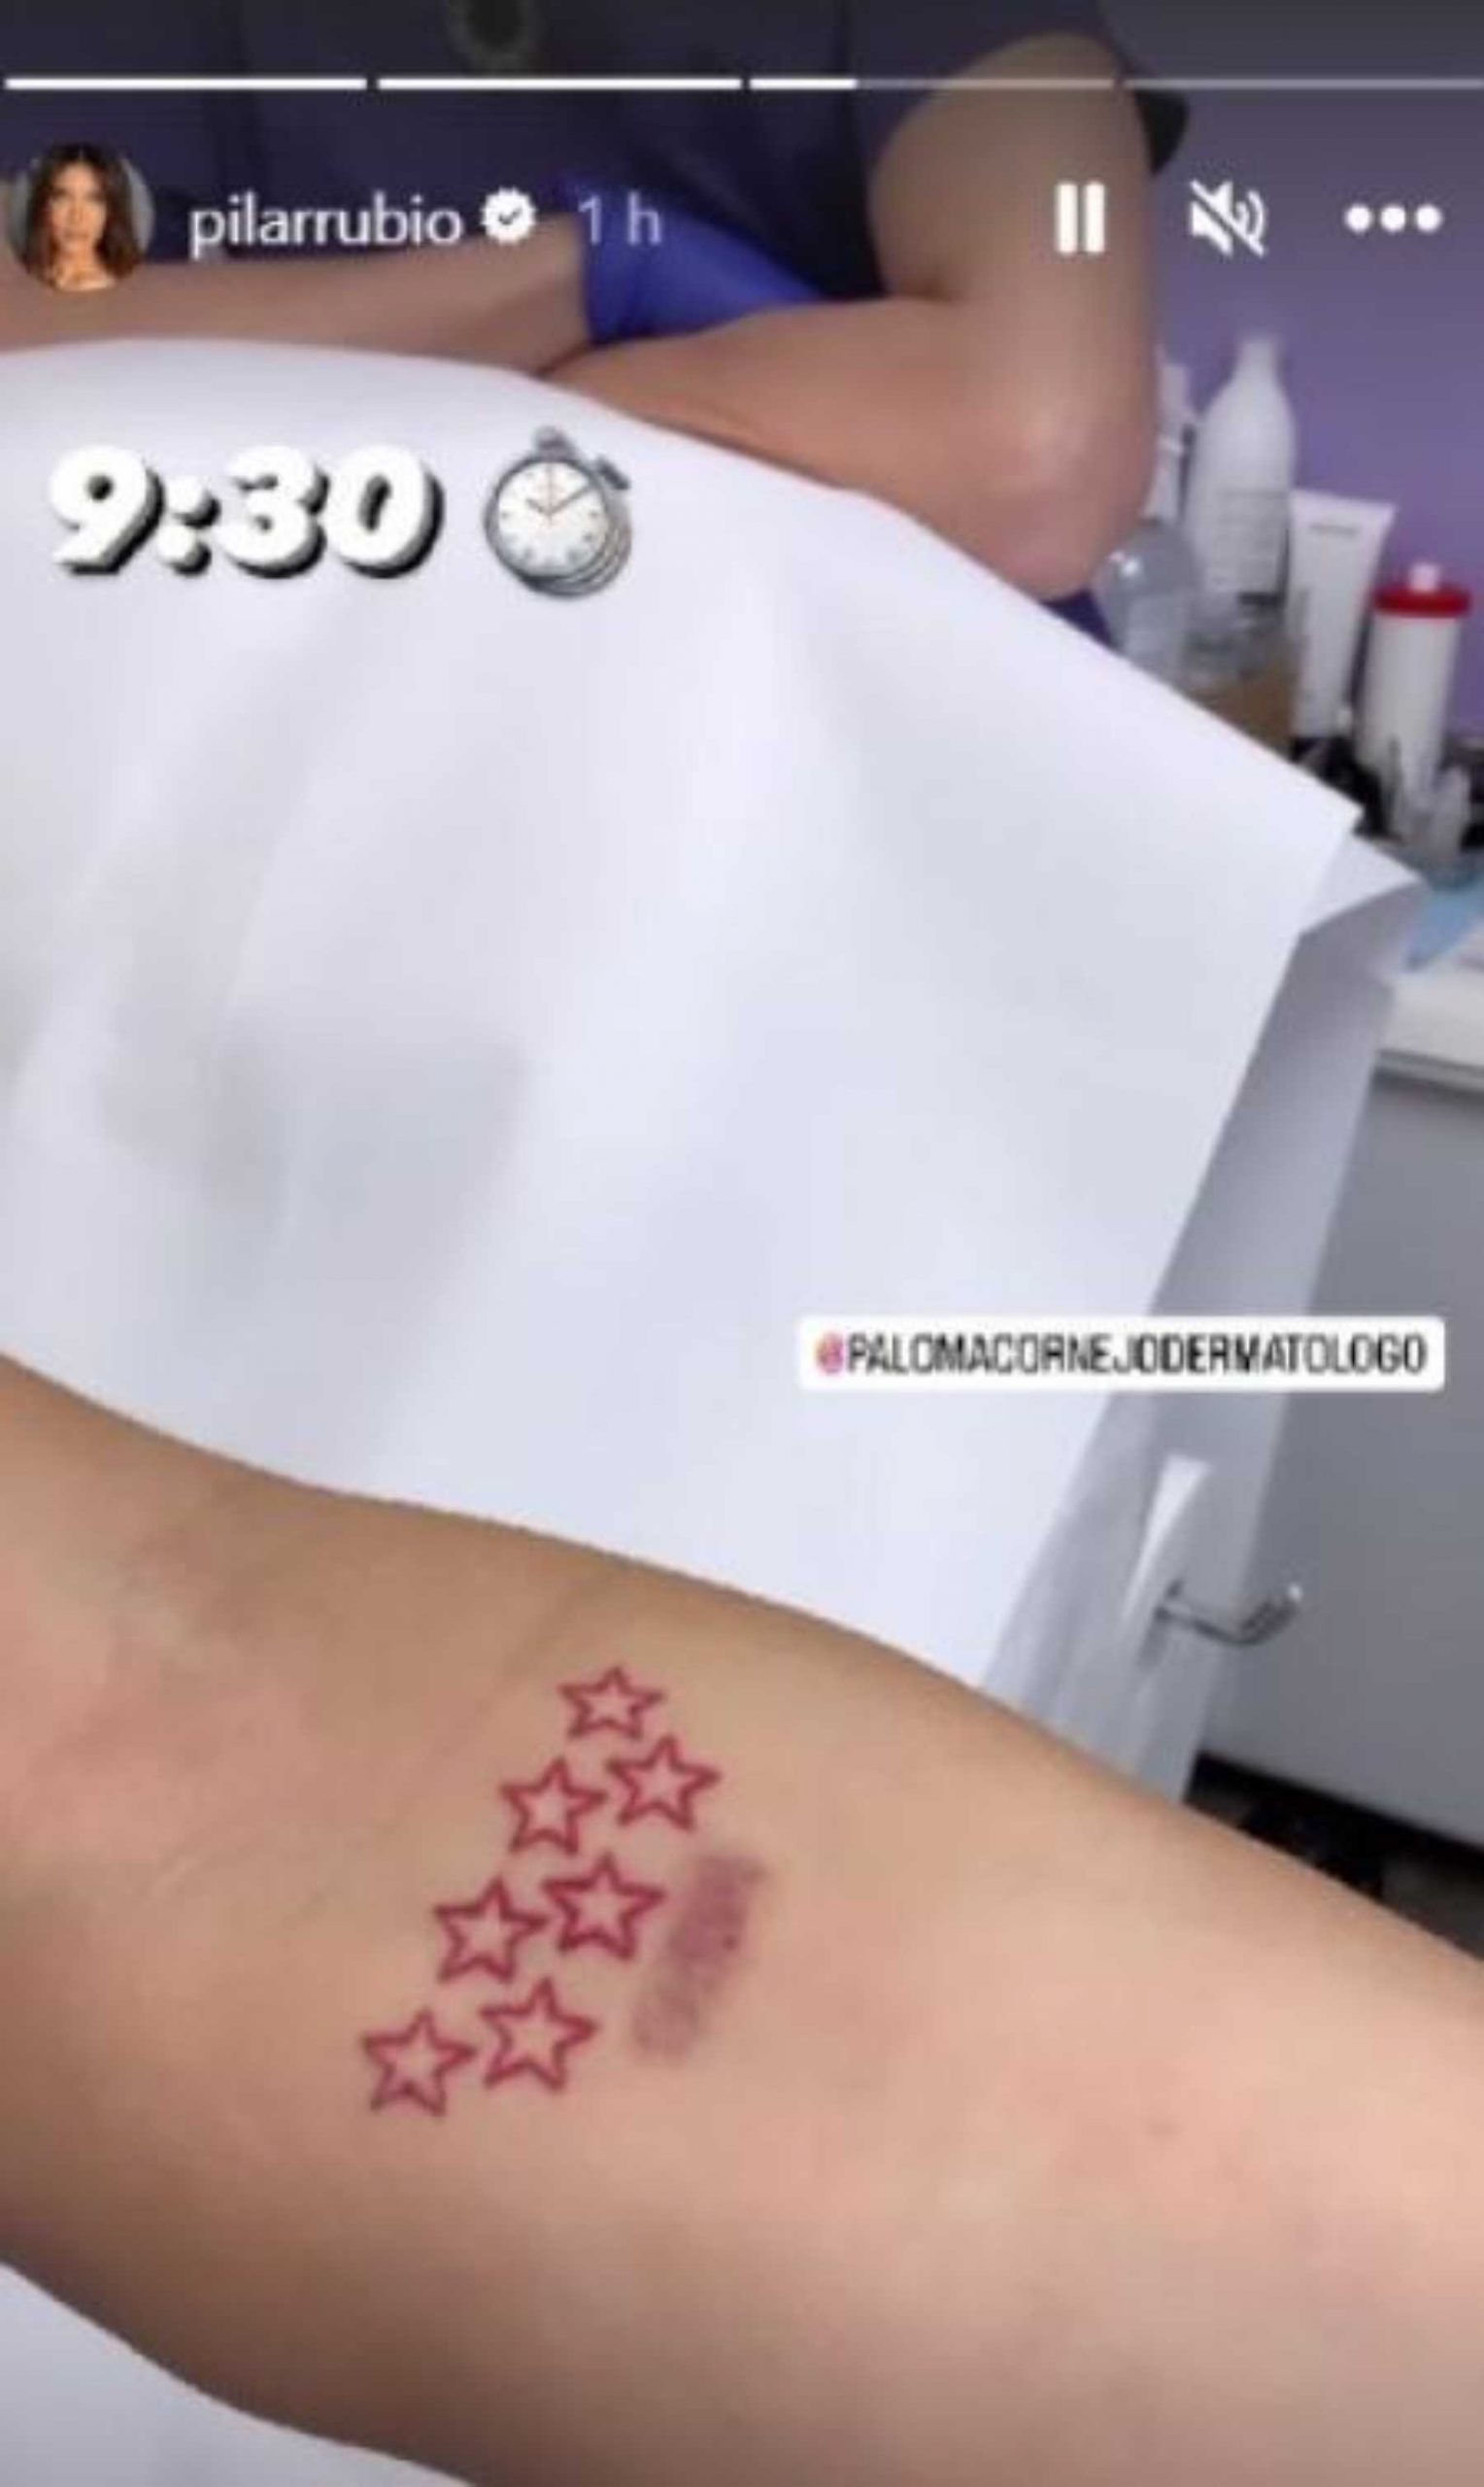 Tatuaje de Pilar Rubio en honor a Madrid / Instagram